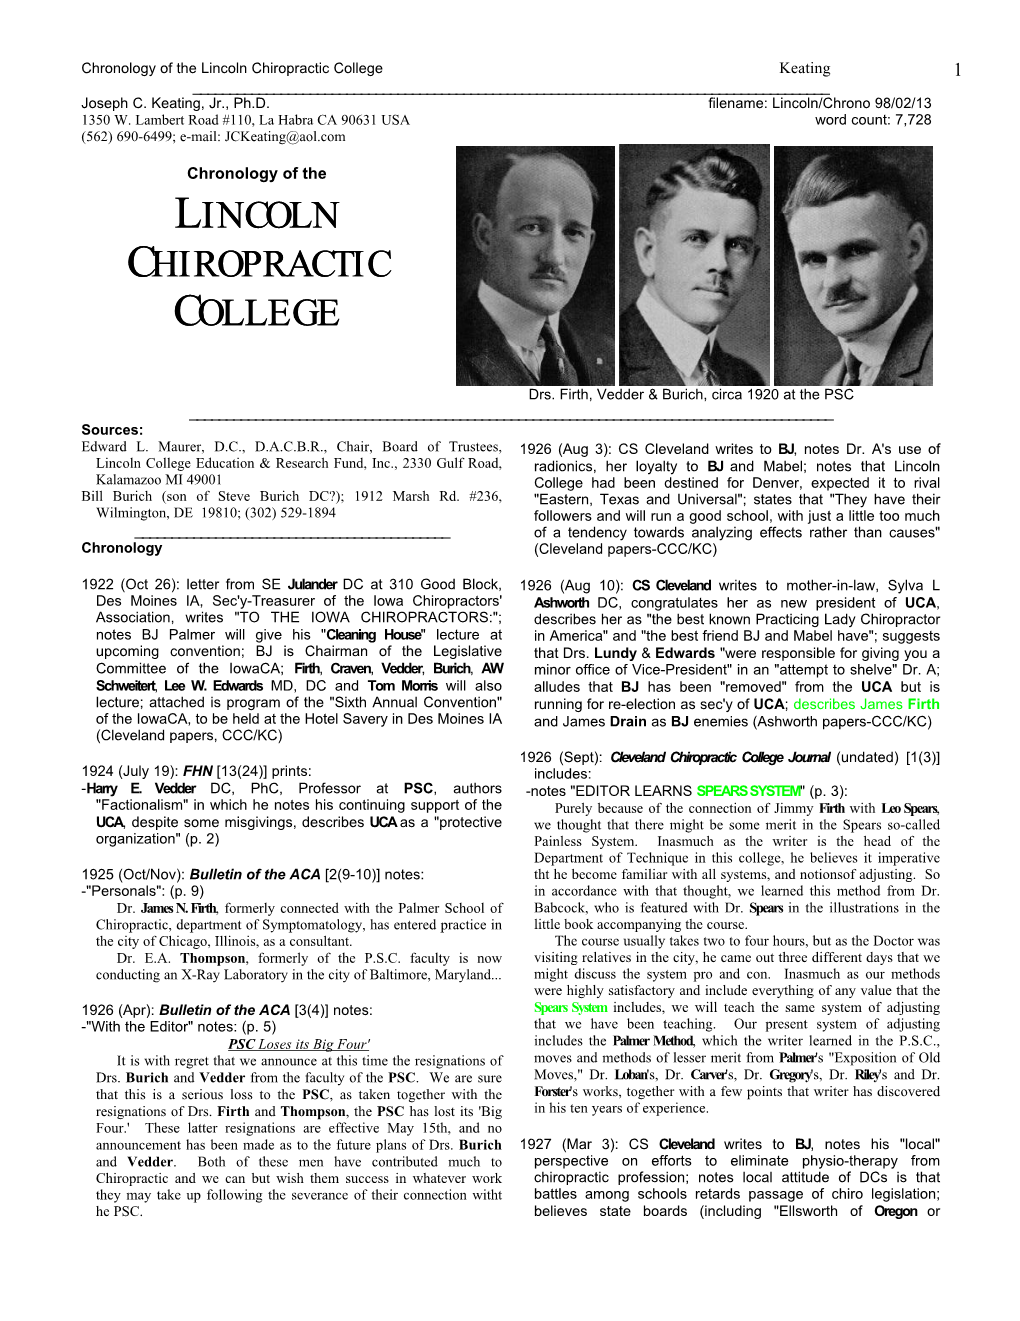 Lincoln Chiropractic College Keating 1 ______Joseph C